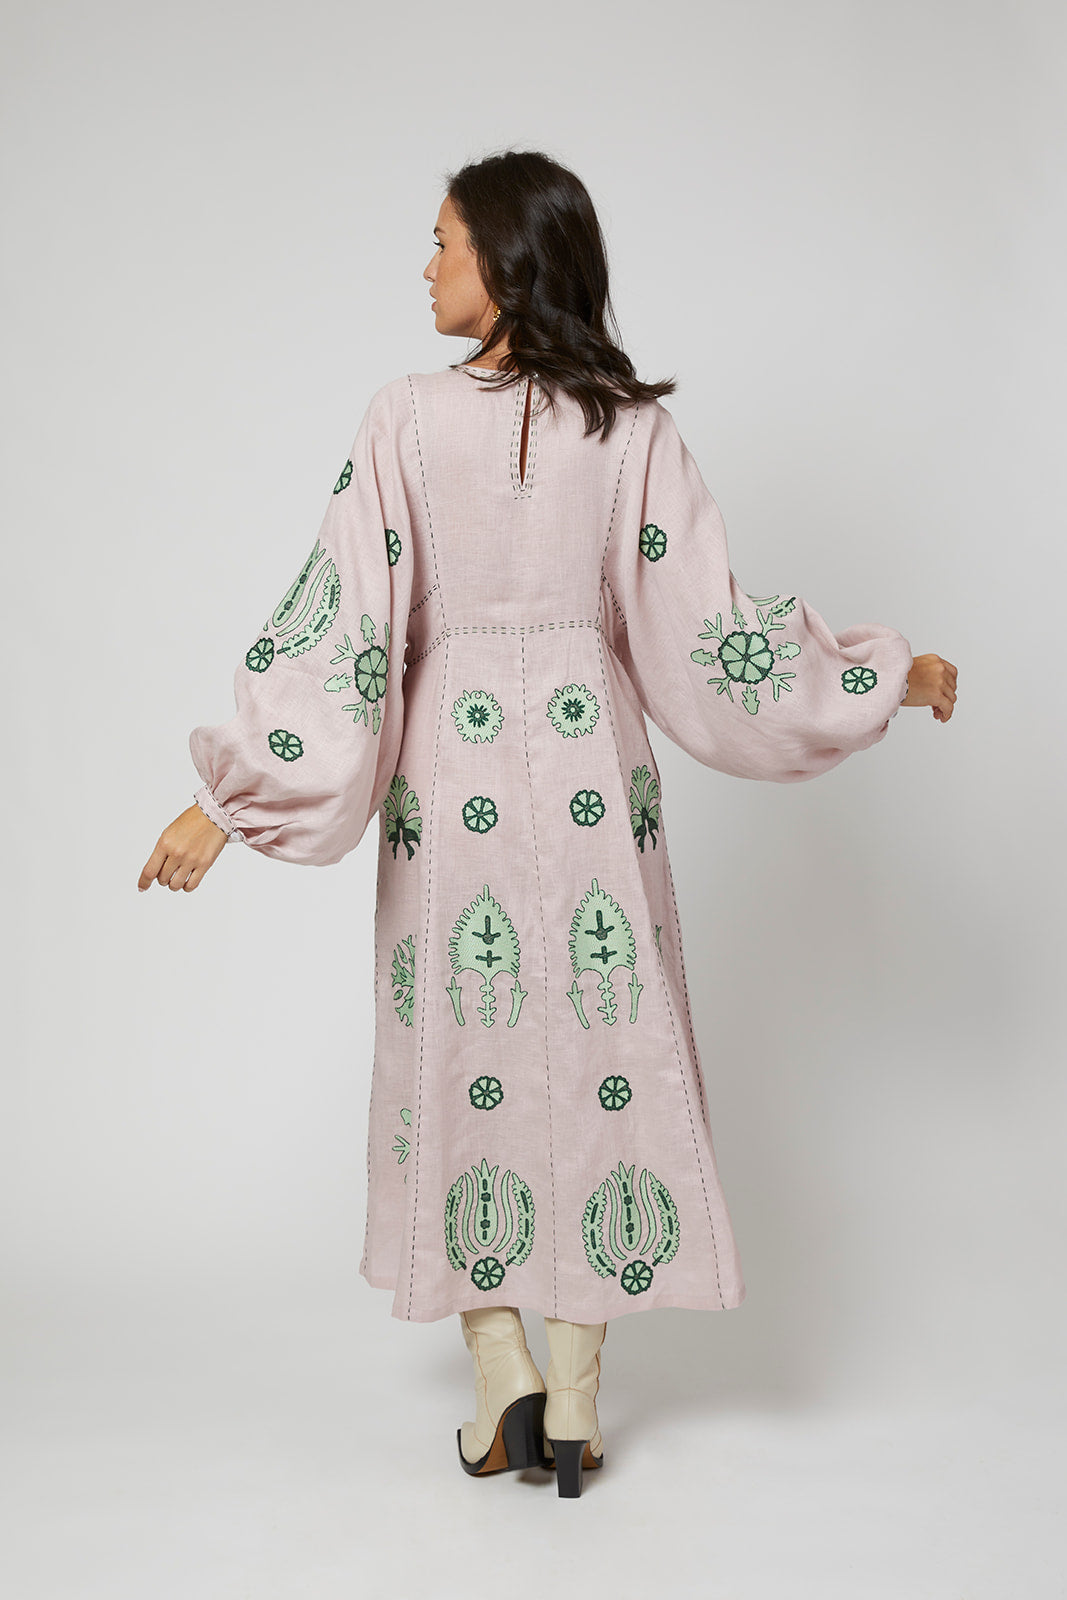 Carolyna Ukrainian Embroidered Dress - Lavender, Mint, Green by Larkin Lane